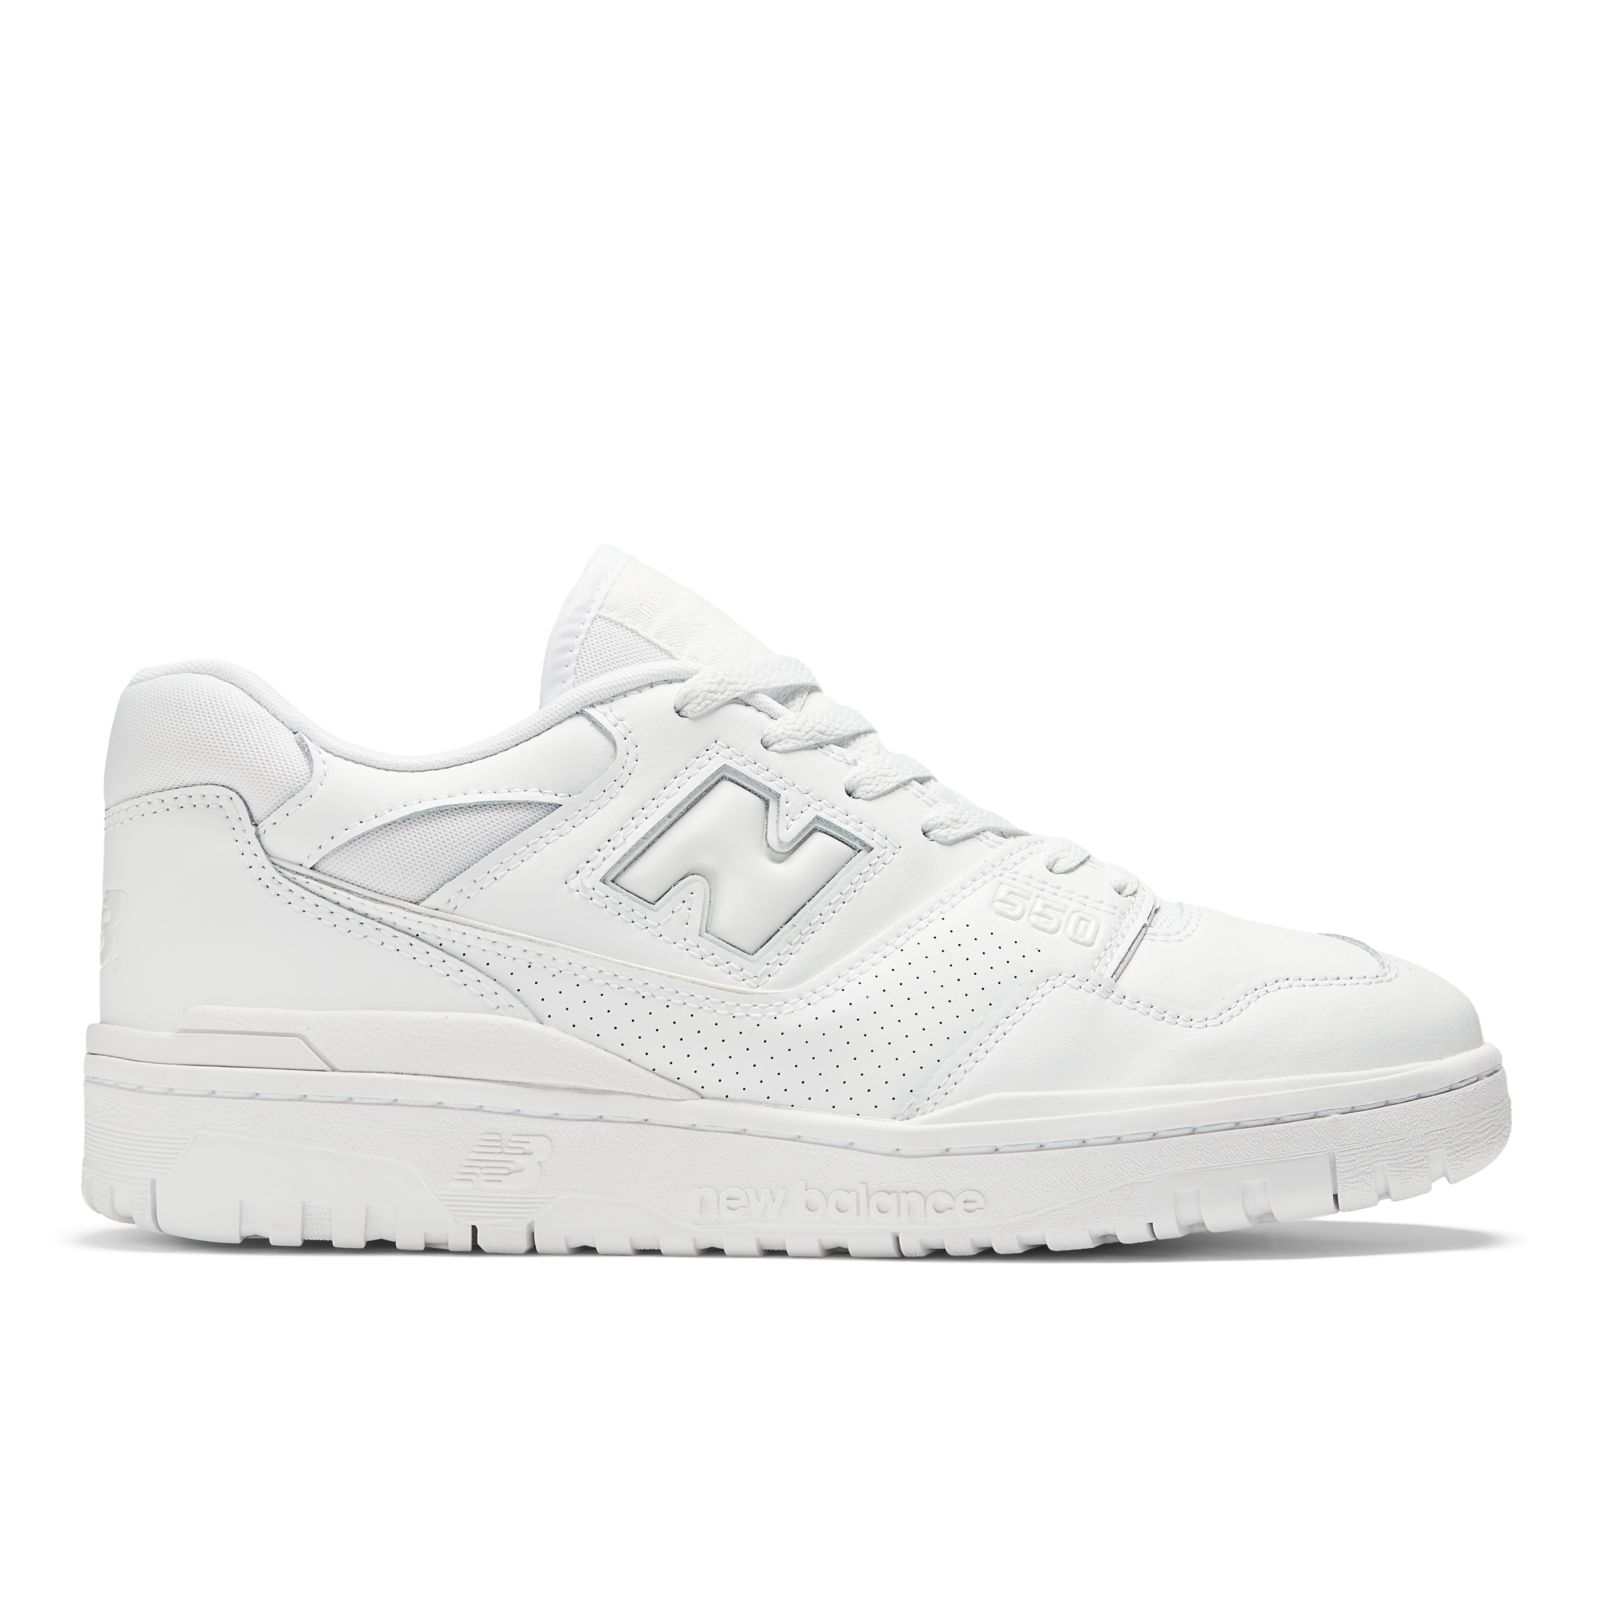 New Balance 550 White/Grey Basketball Sneaker